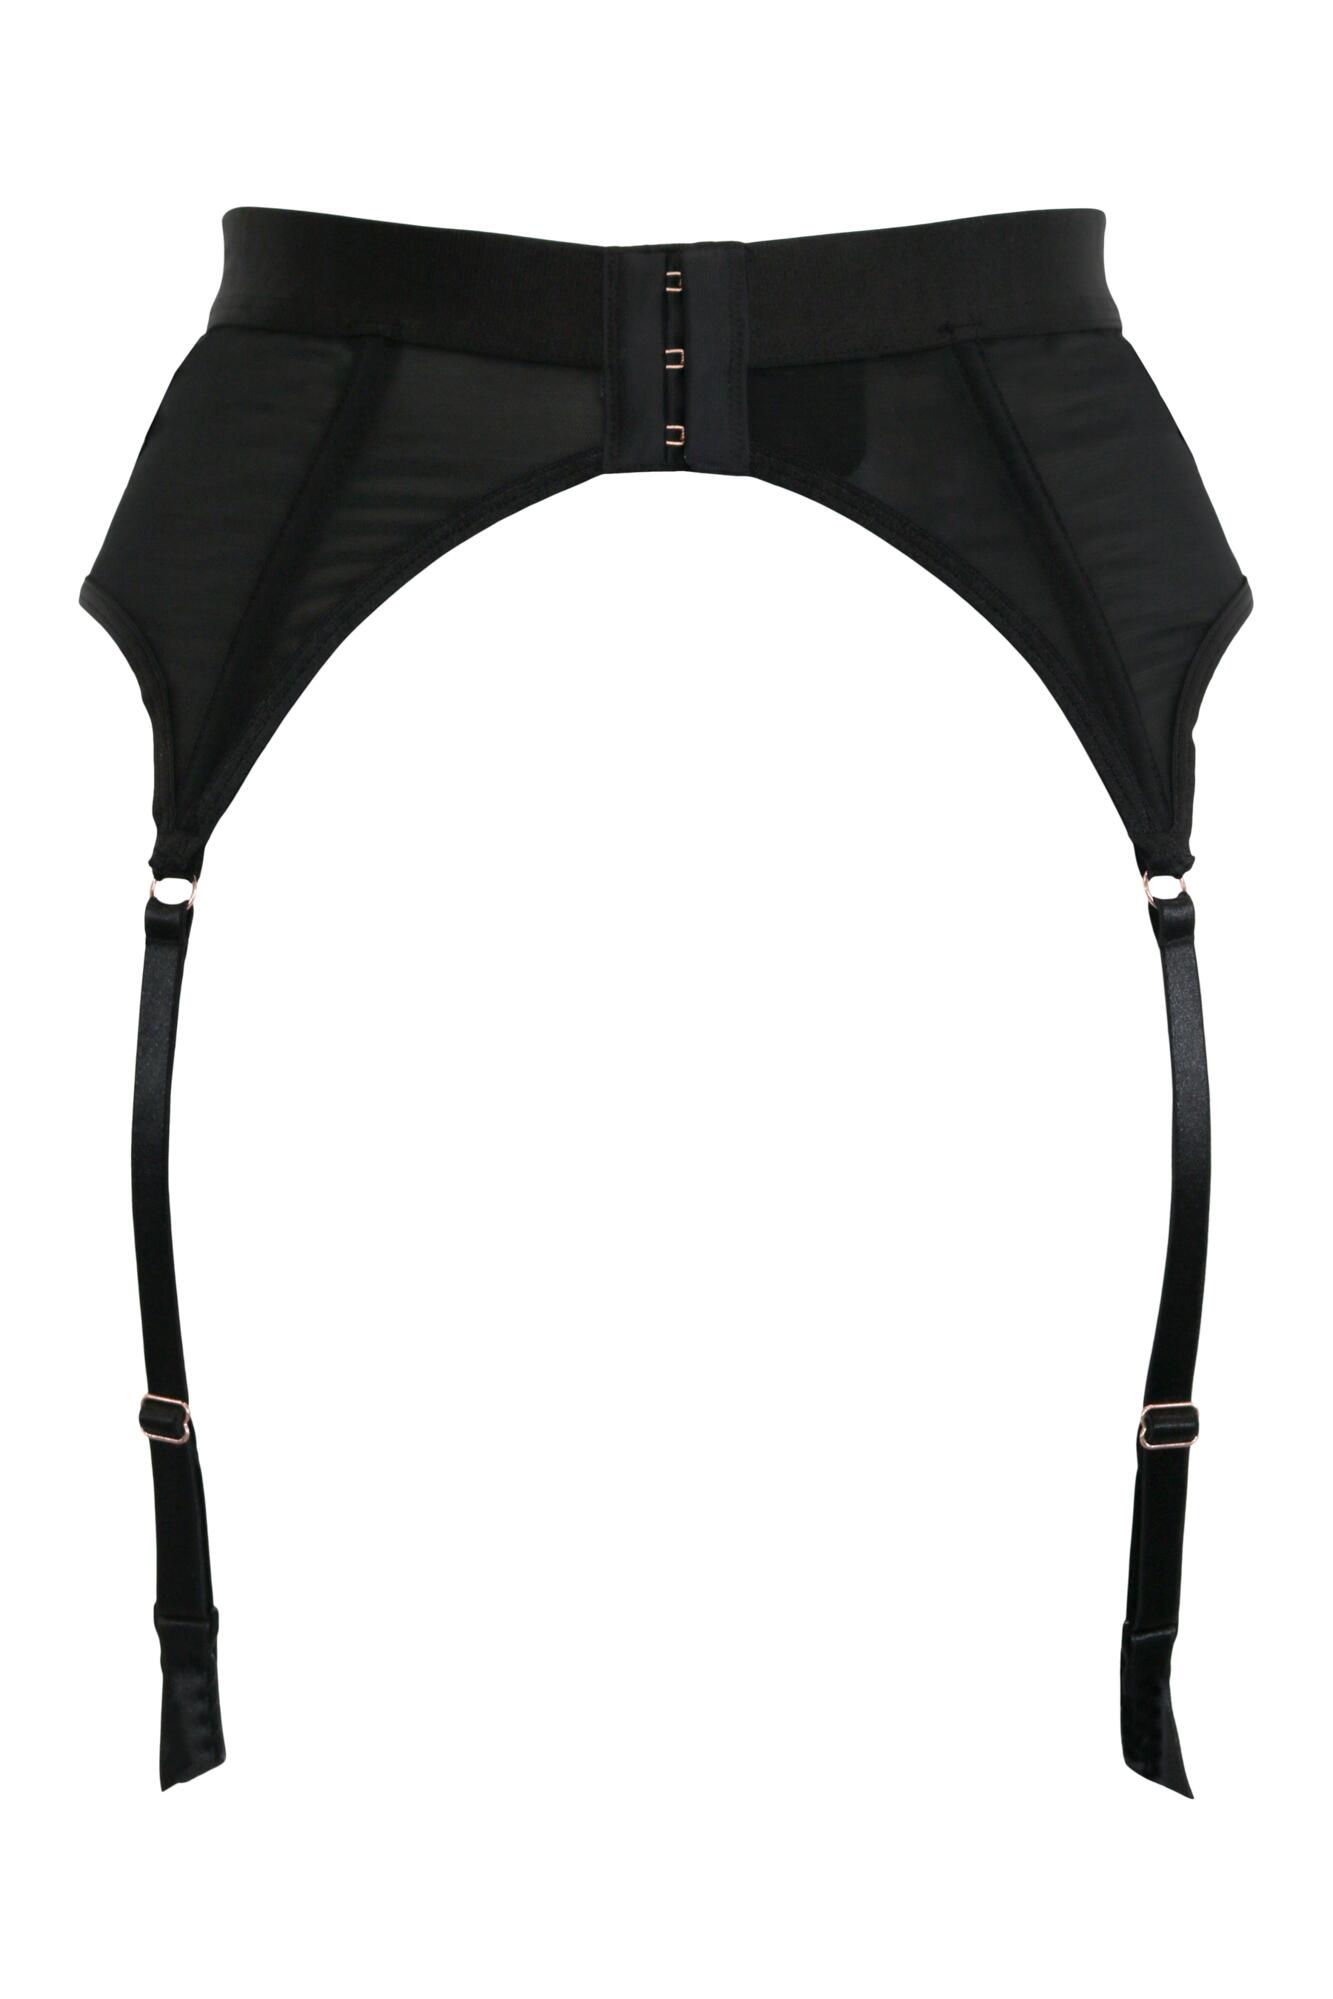 NEW AGENT PROVOCATEUR Set 32B Bra Knickers Suspender Belt Black